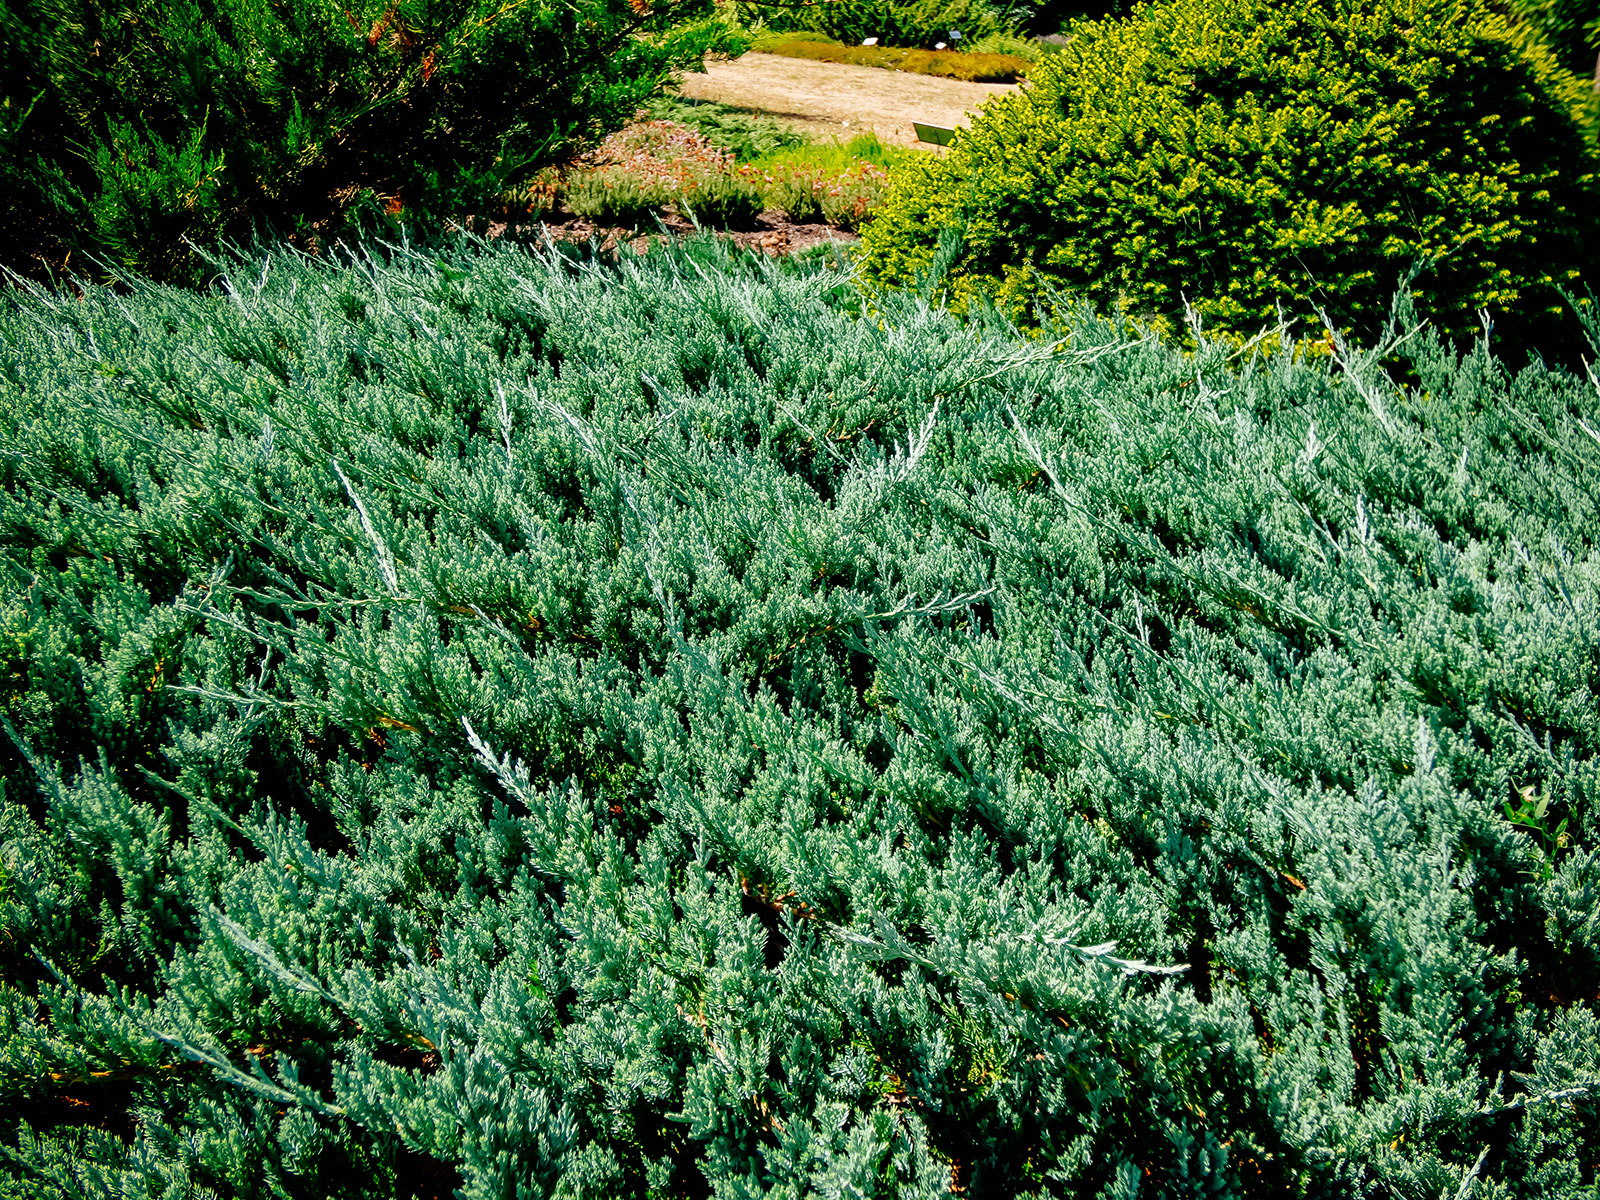 Creeping juniper ground cover in a yard